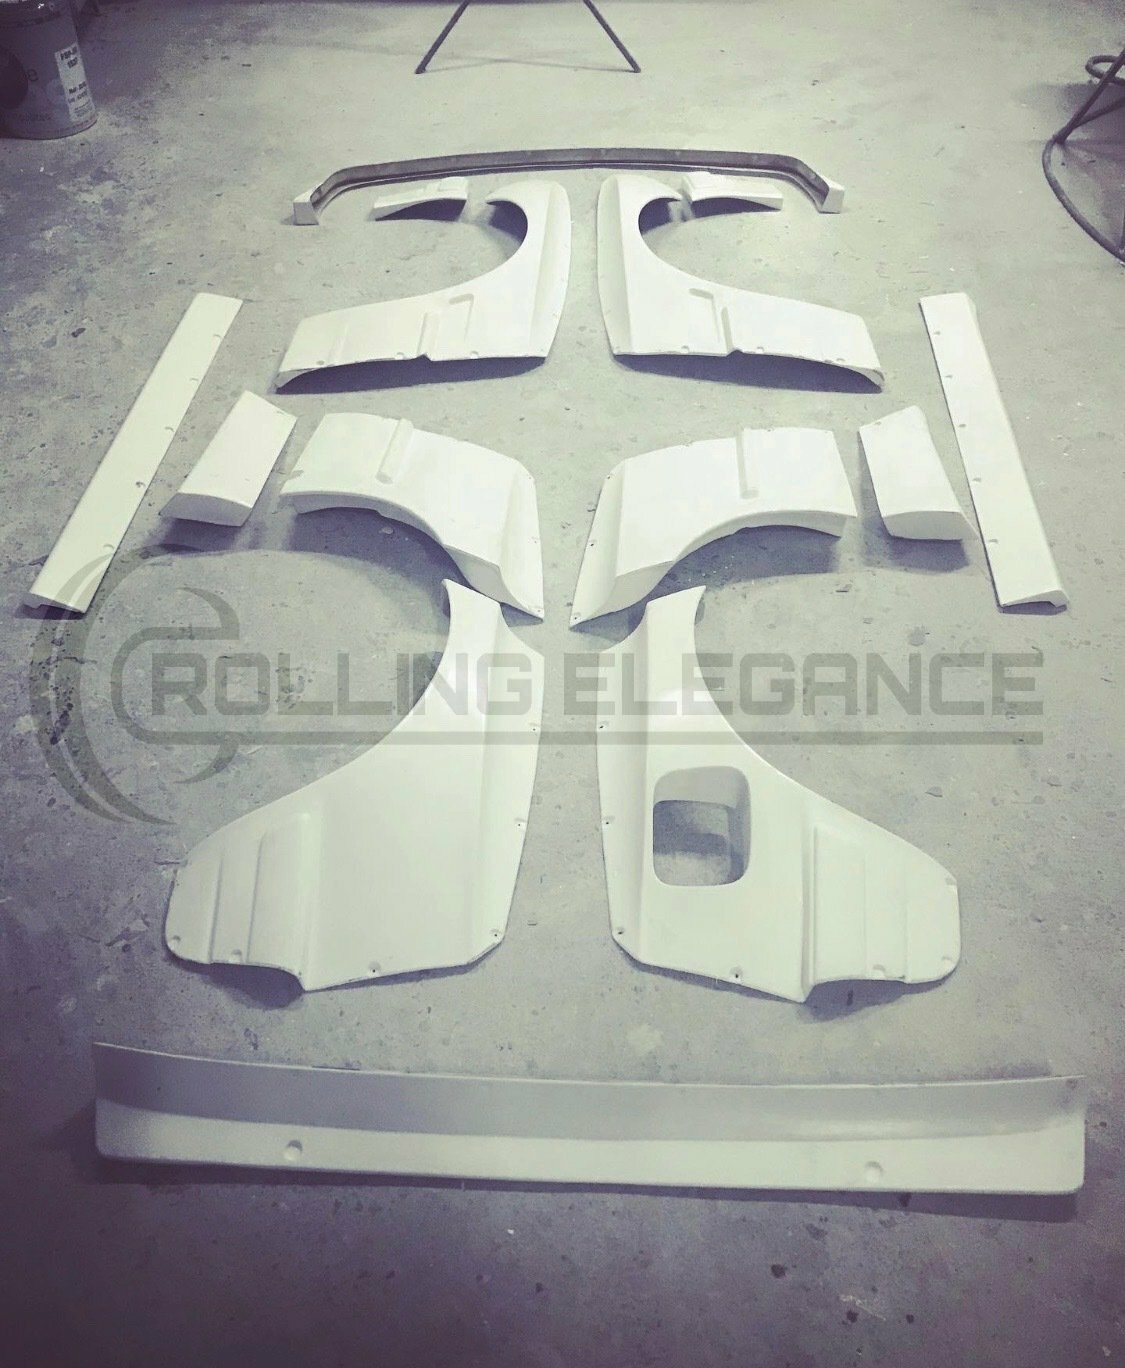 Rolling Elegance Wide Body Kit für BMW E30 Limousine/Kombi